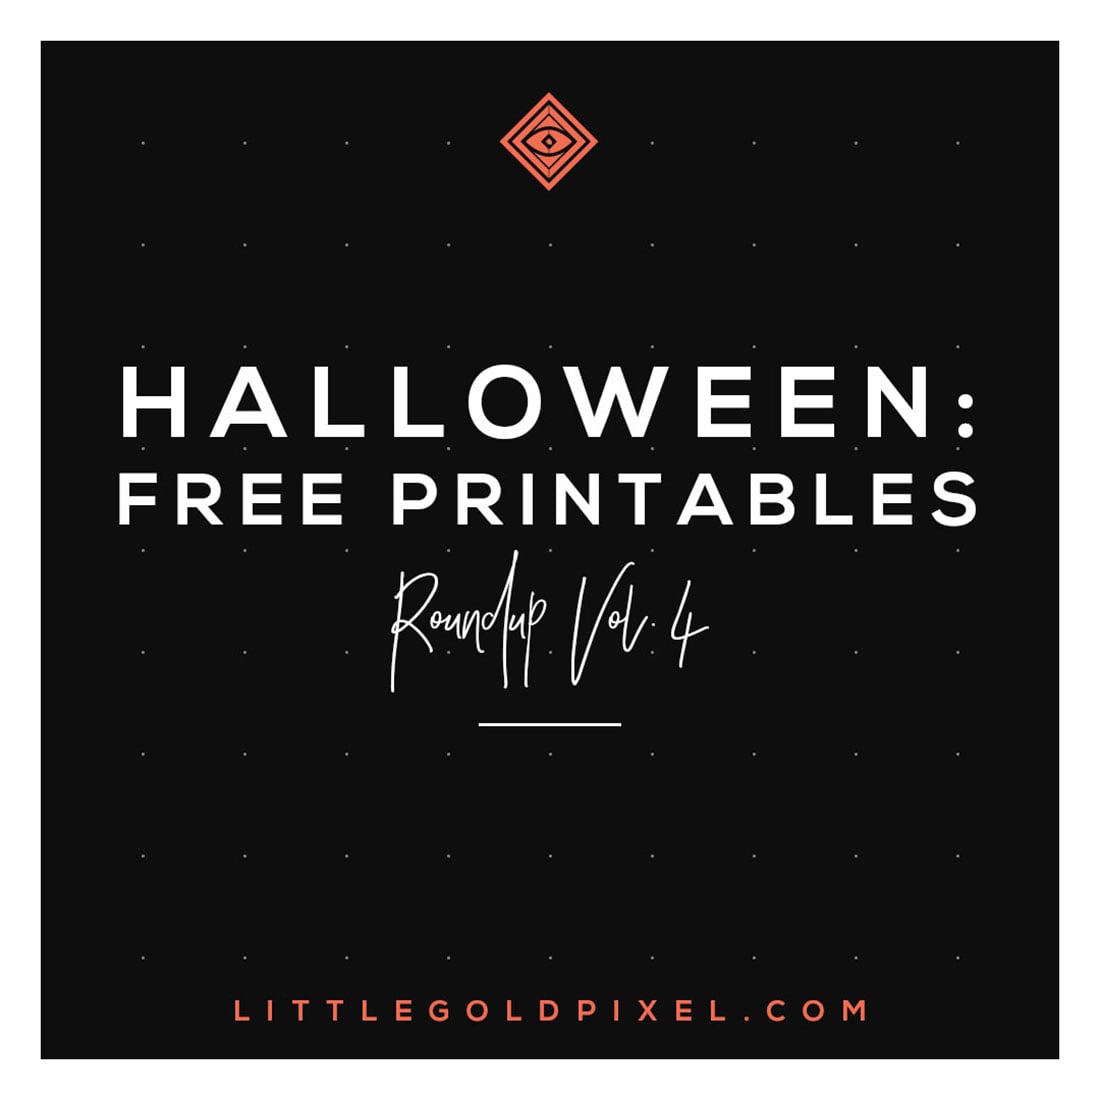 Free Halloween Printables: Vol. 4